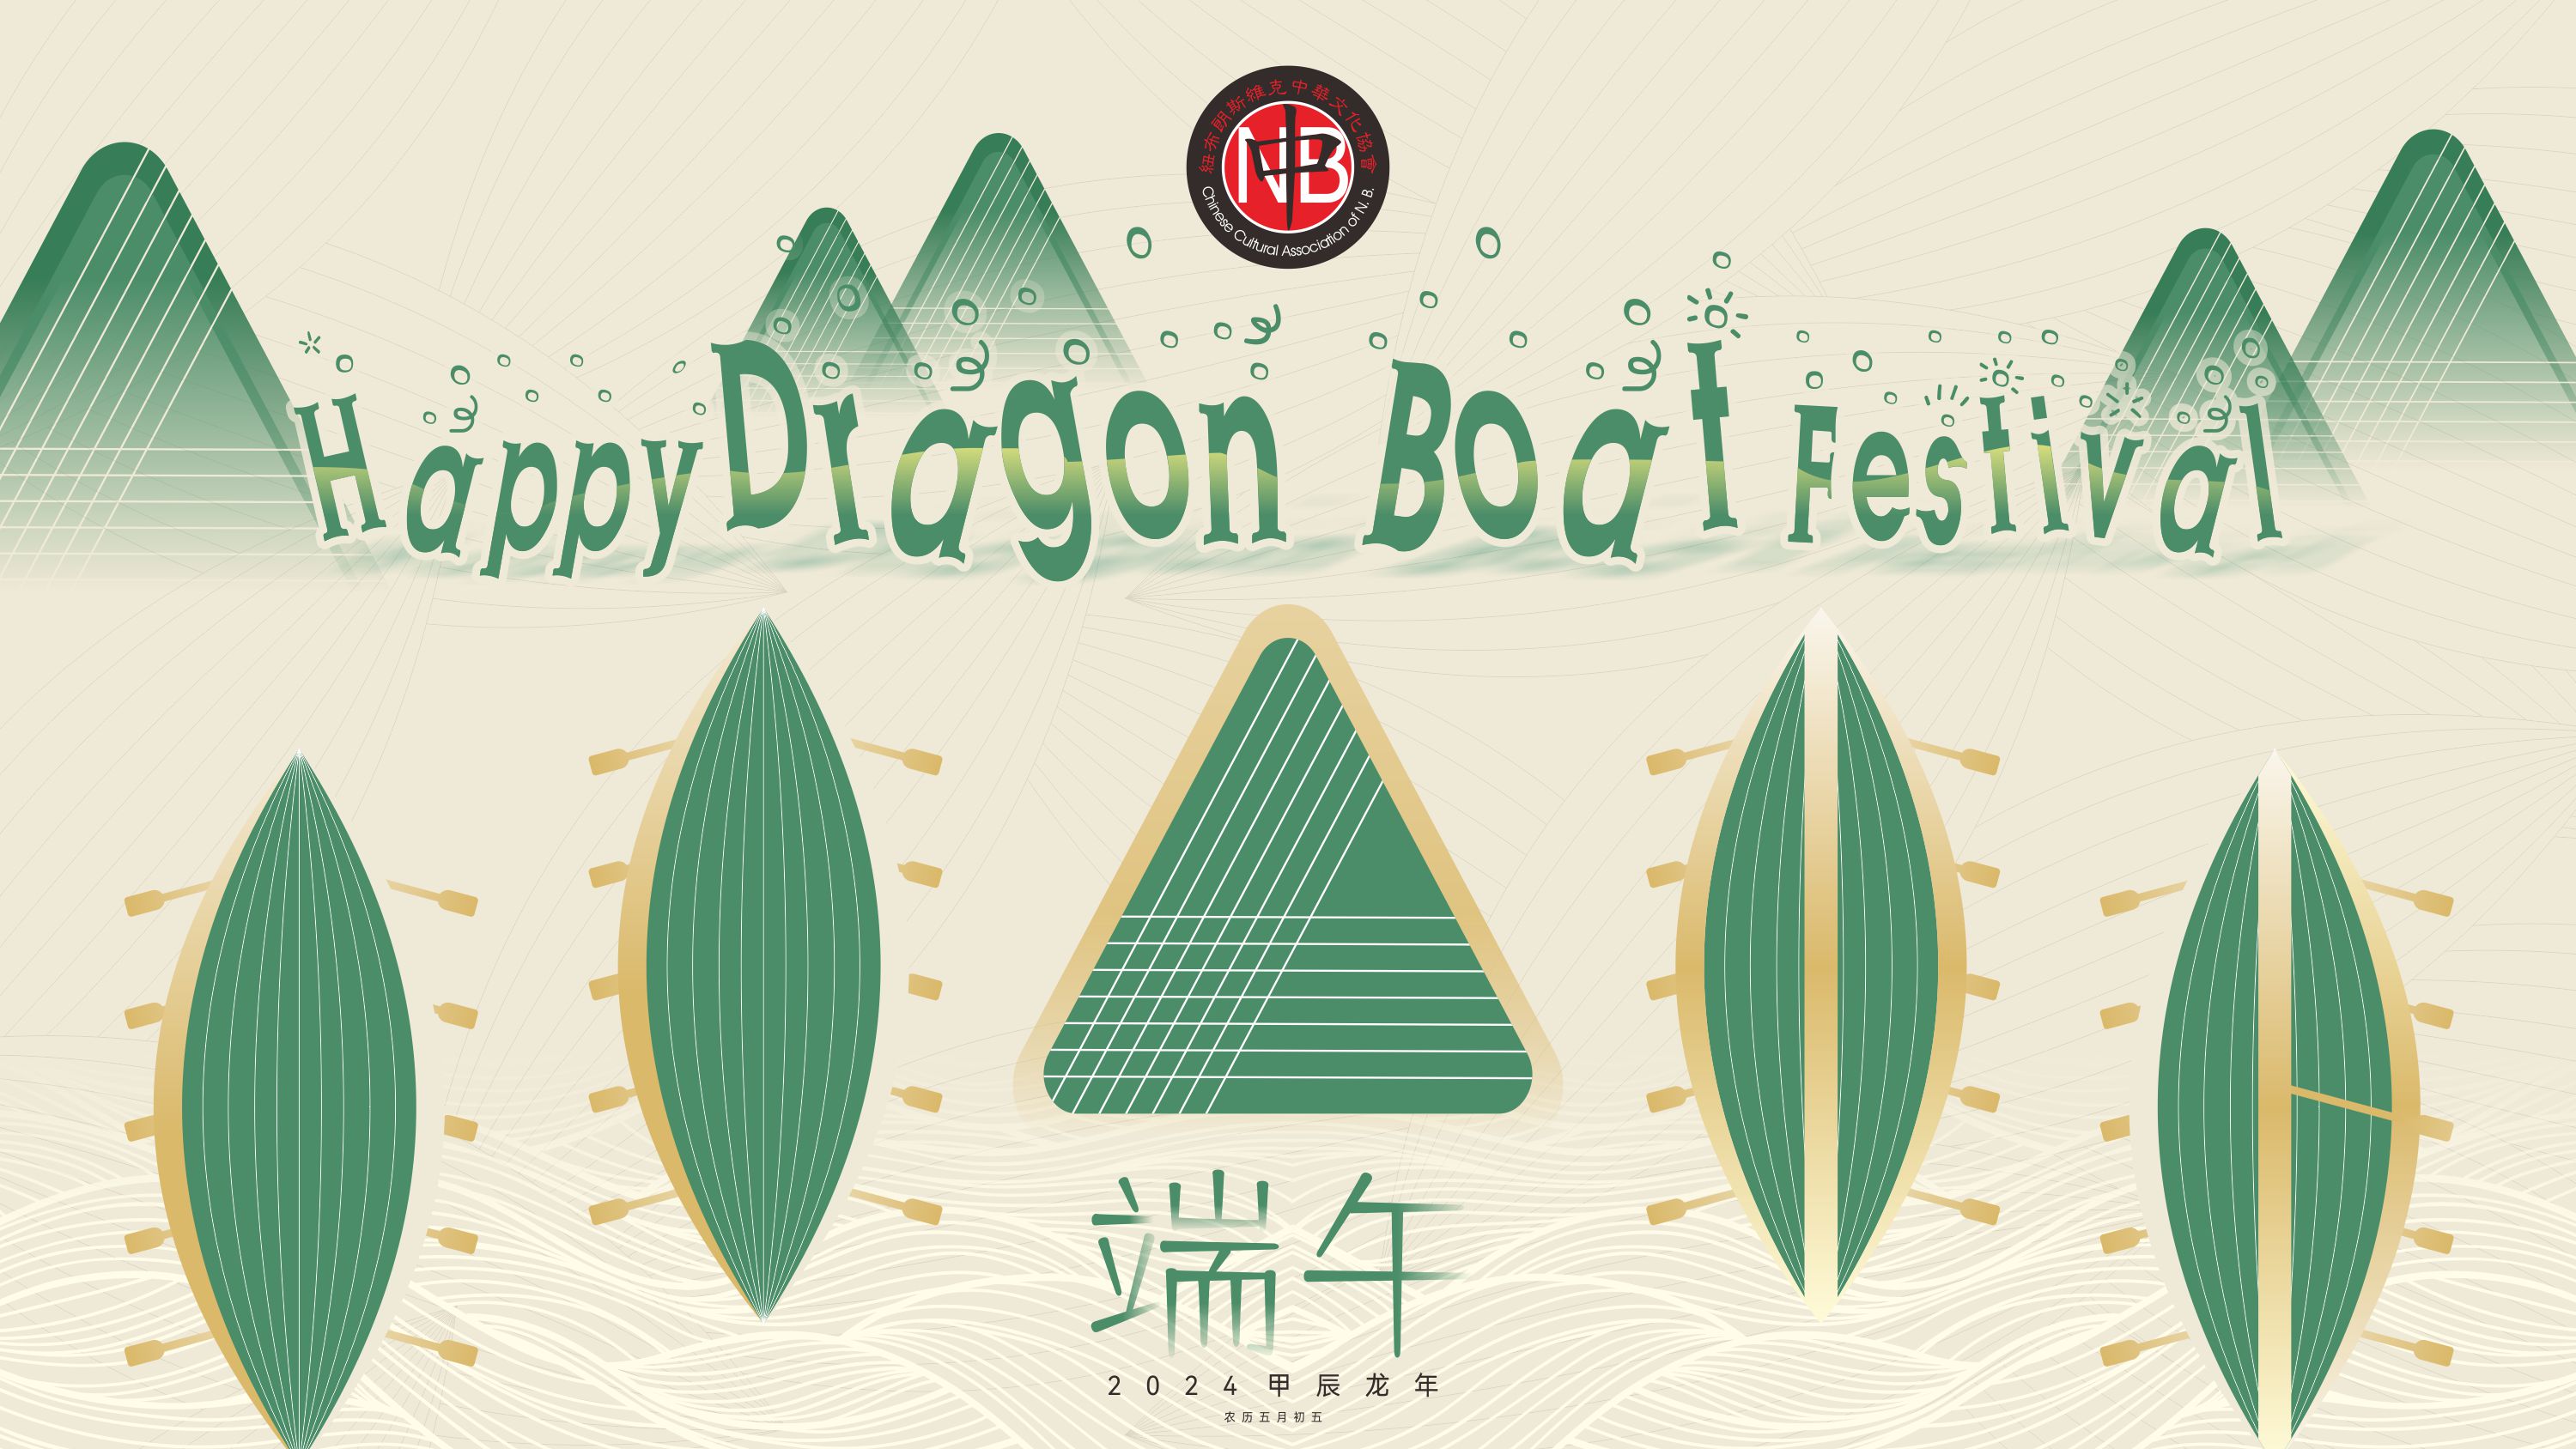 /article/posts/lets-celebrate-the-dragon-boat-festival-sharing-zongzi-joy